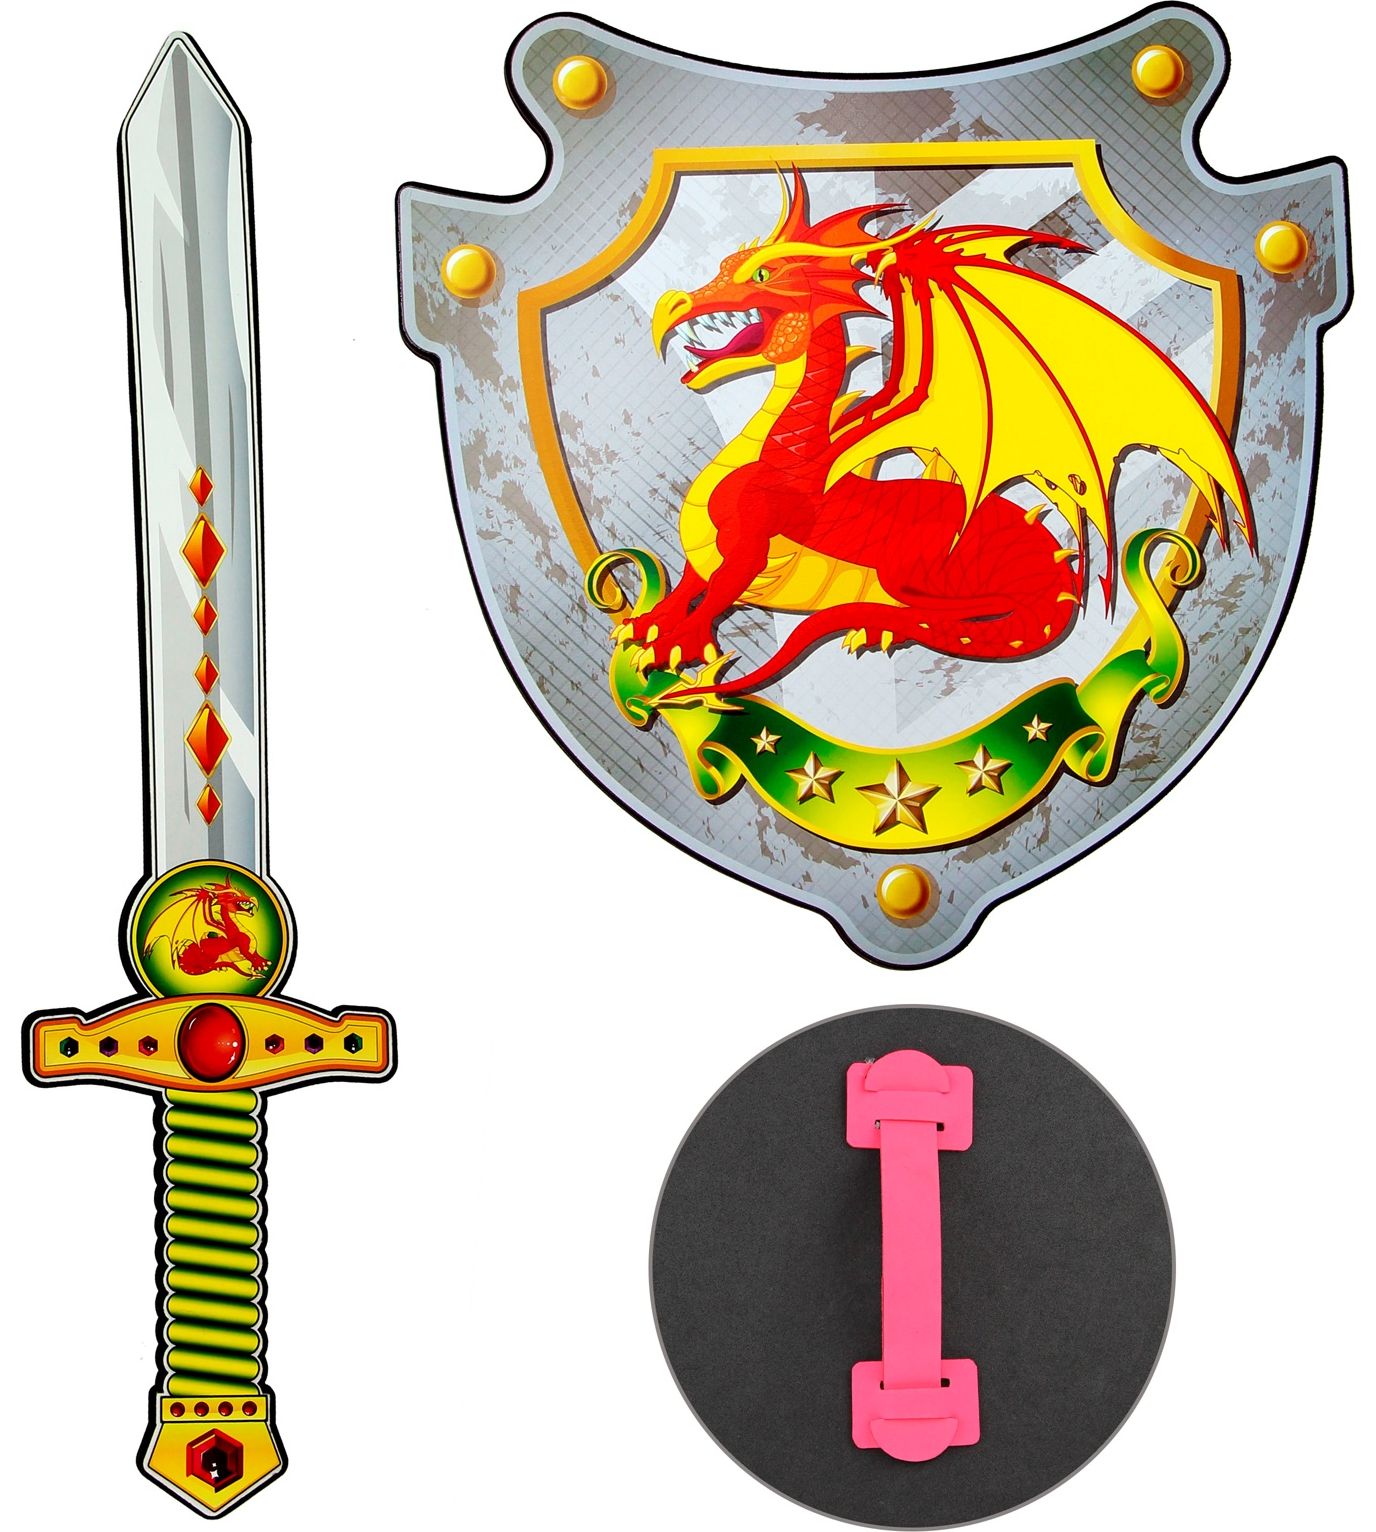 Draken ridder foam zwaard en schild